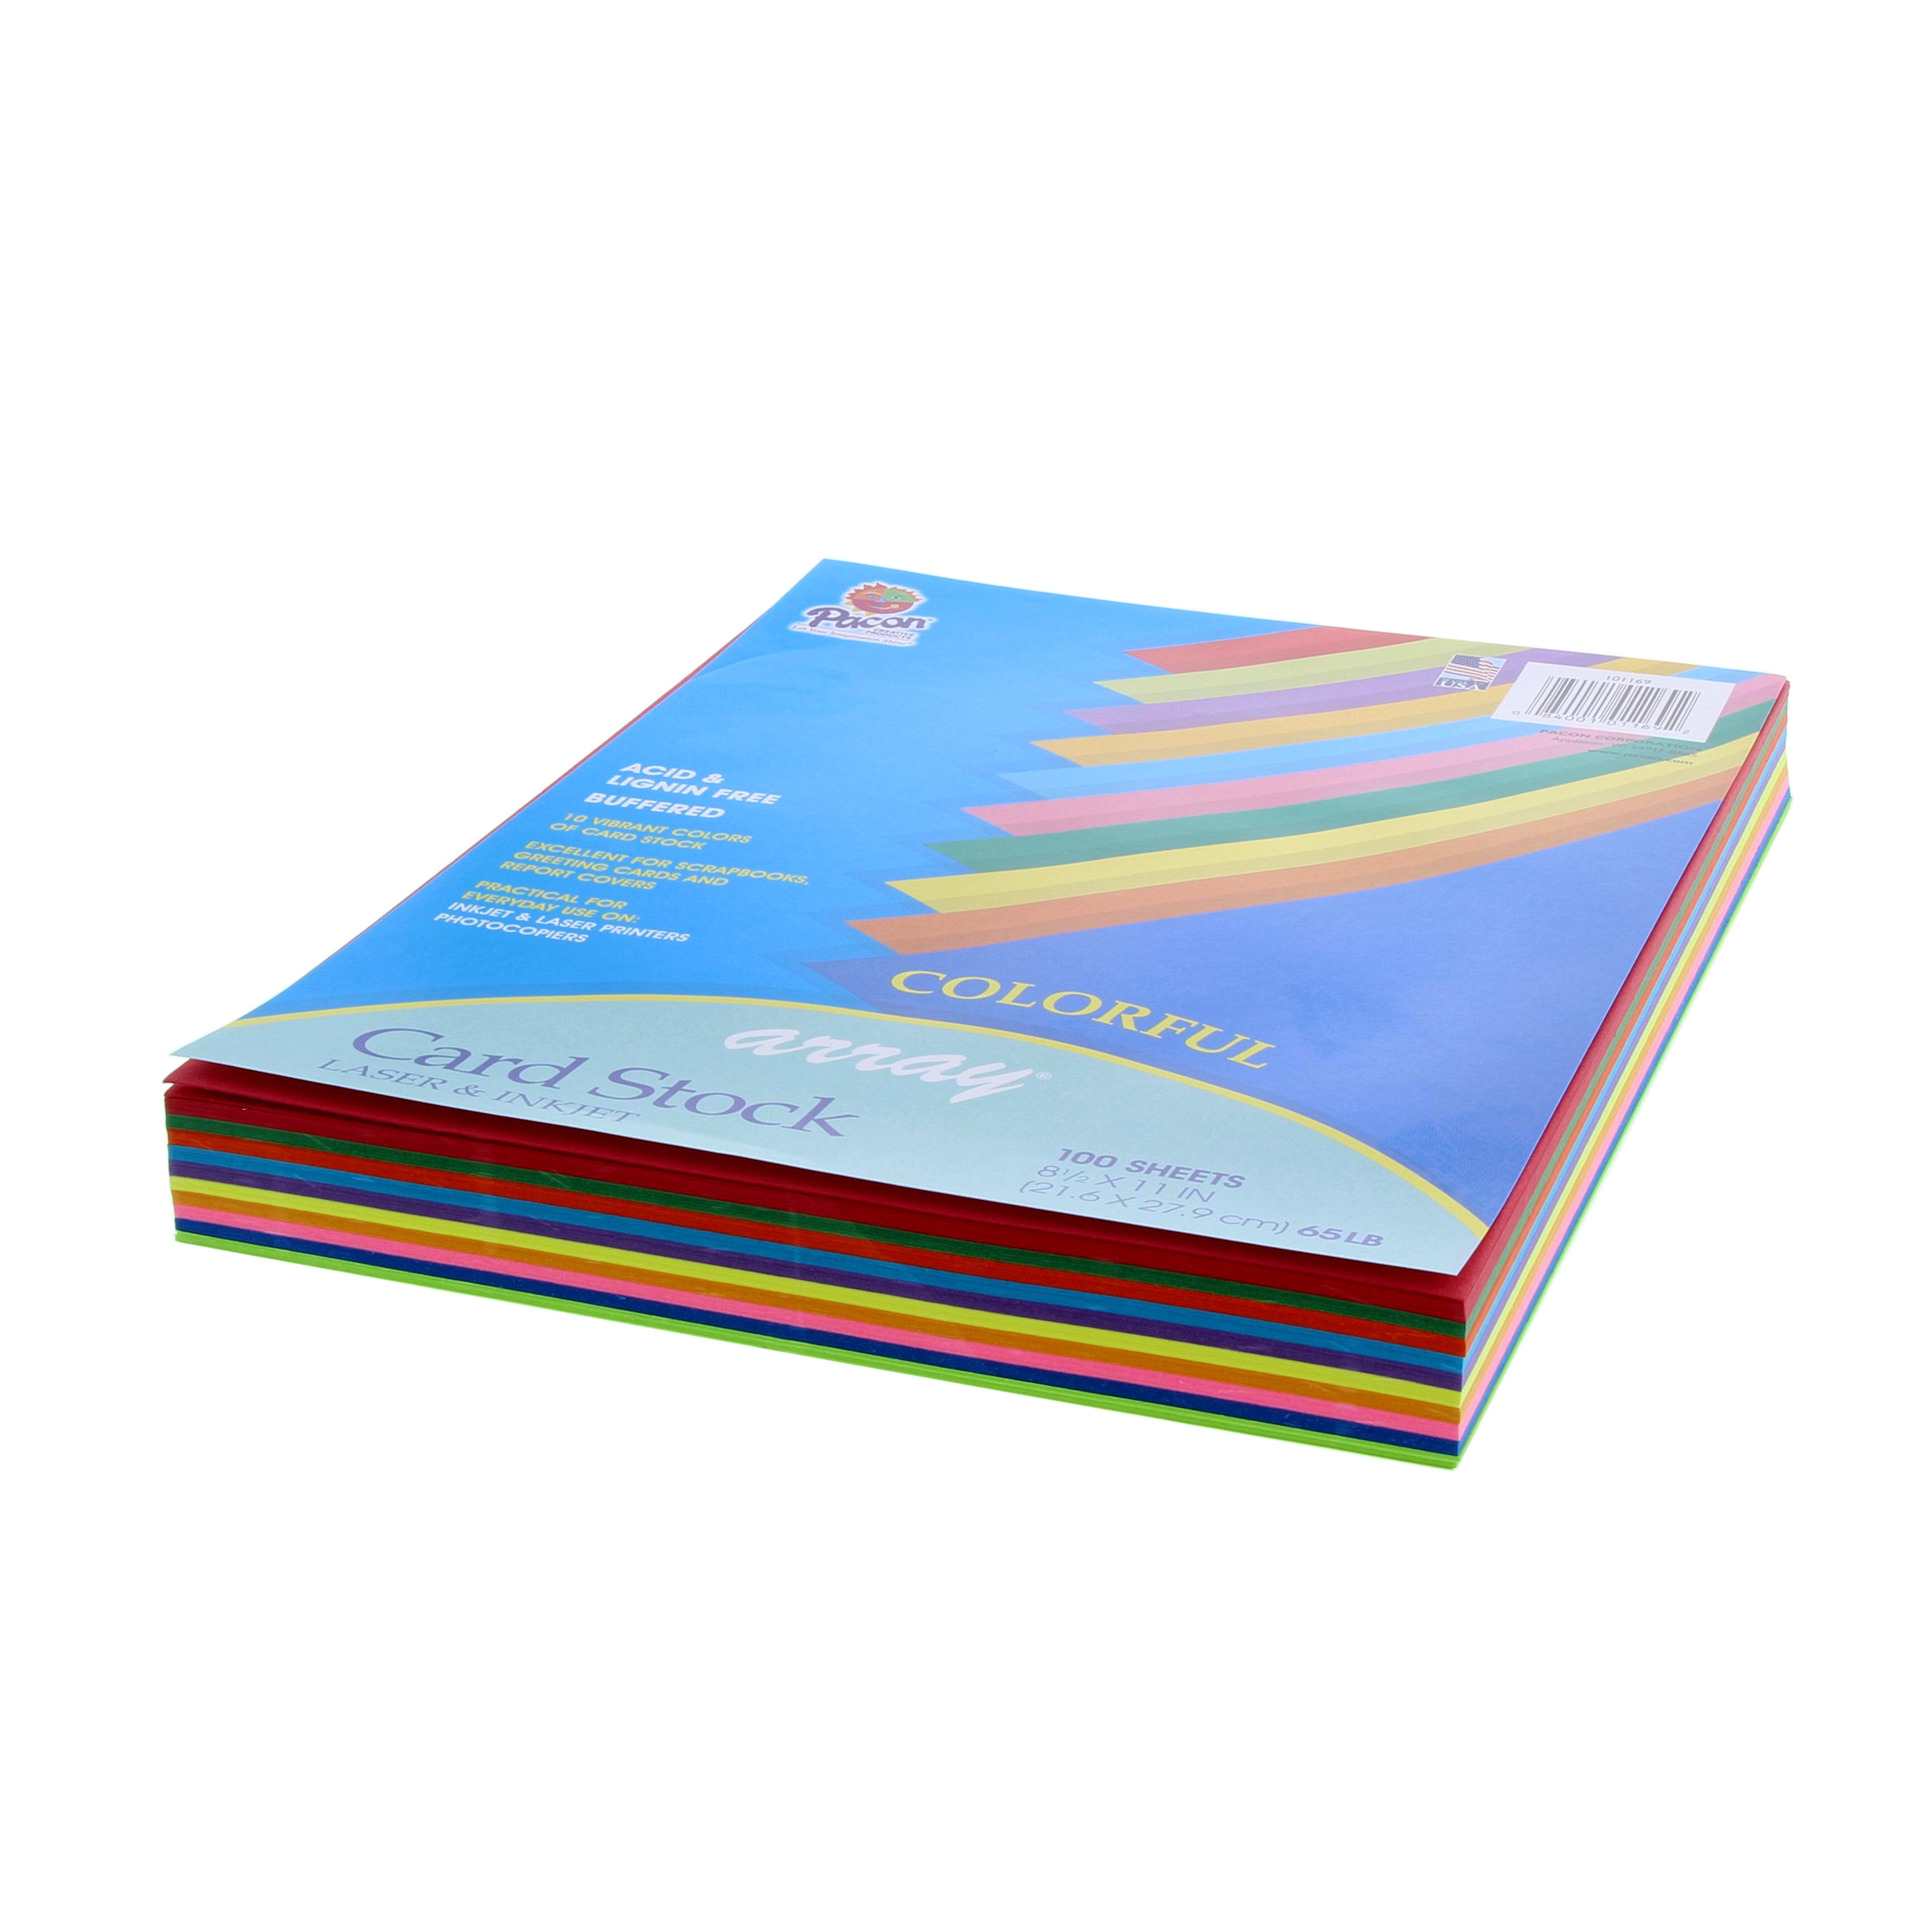 ArrayÂ® Card Stock, Assorted Colors, 100 Sheets